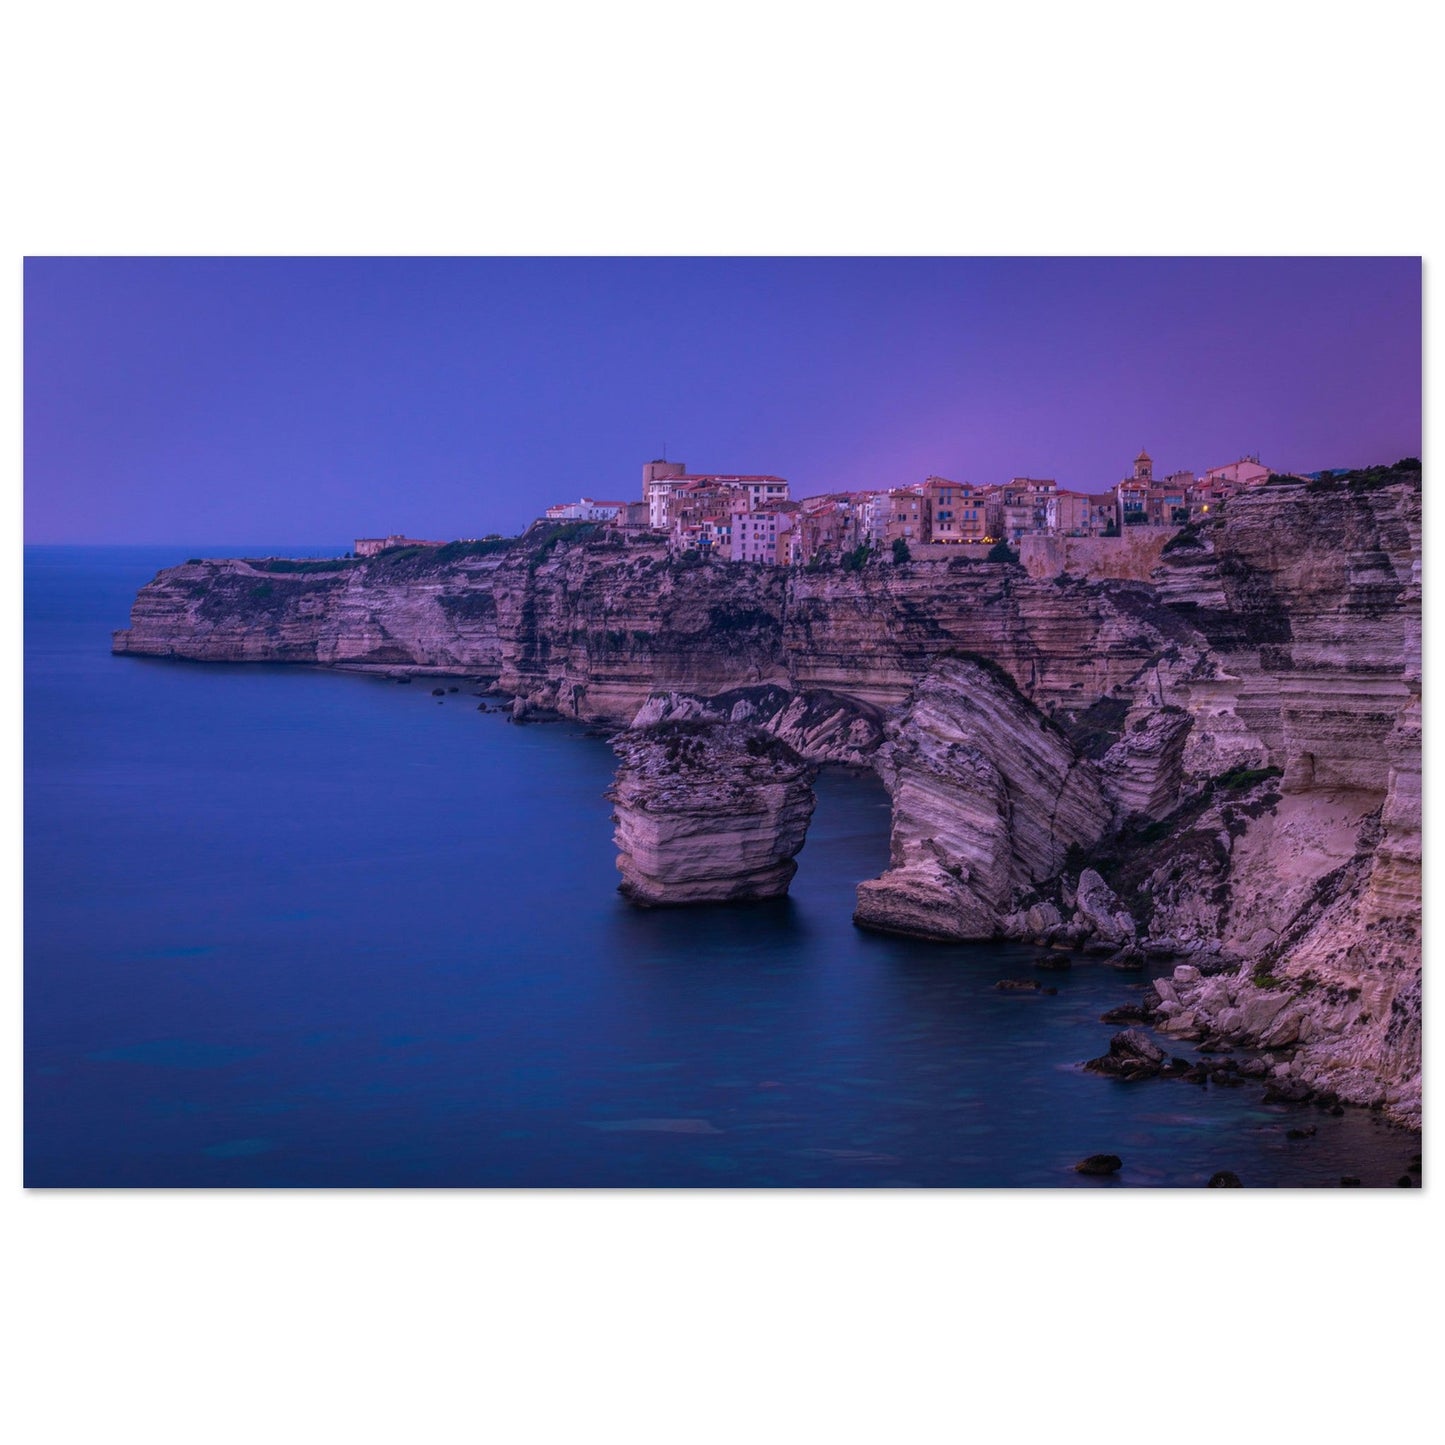 Vente Photo de Bonifacio de nuit, Corse #5 - Tableau photo paysage